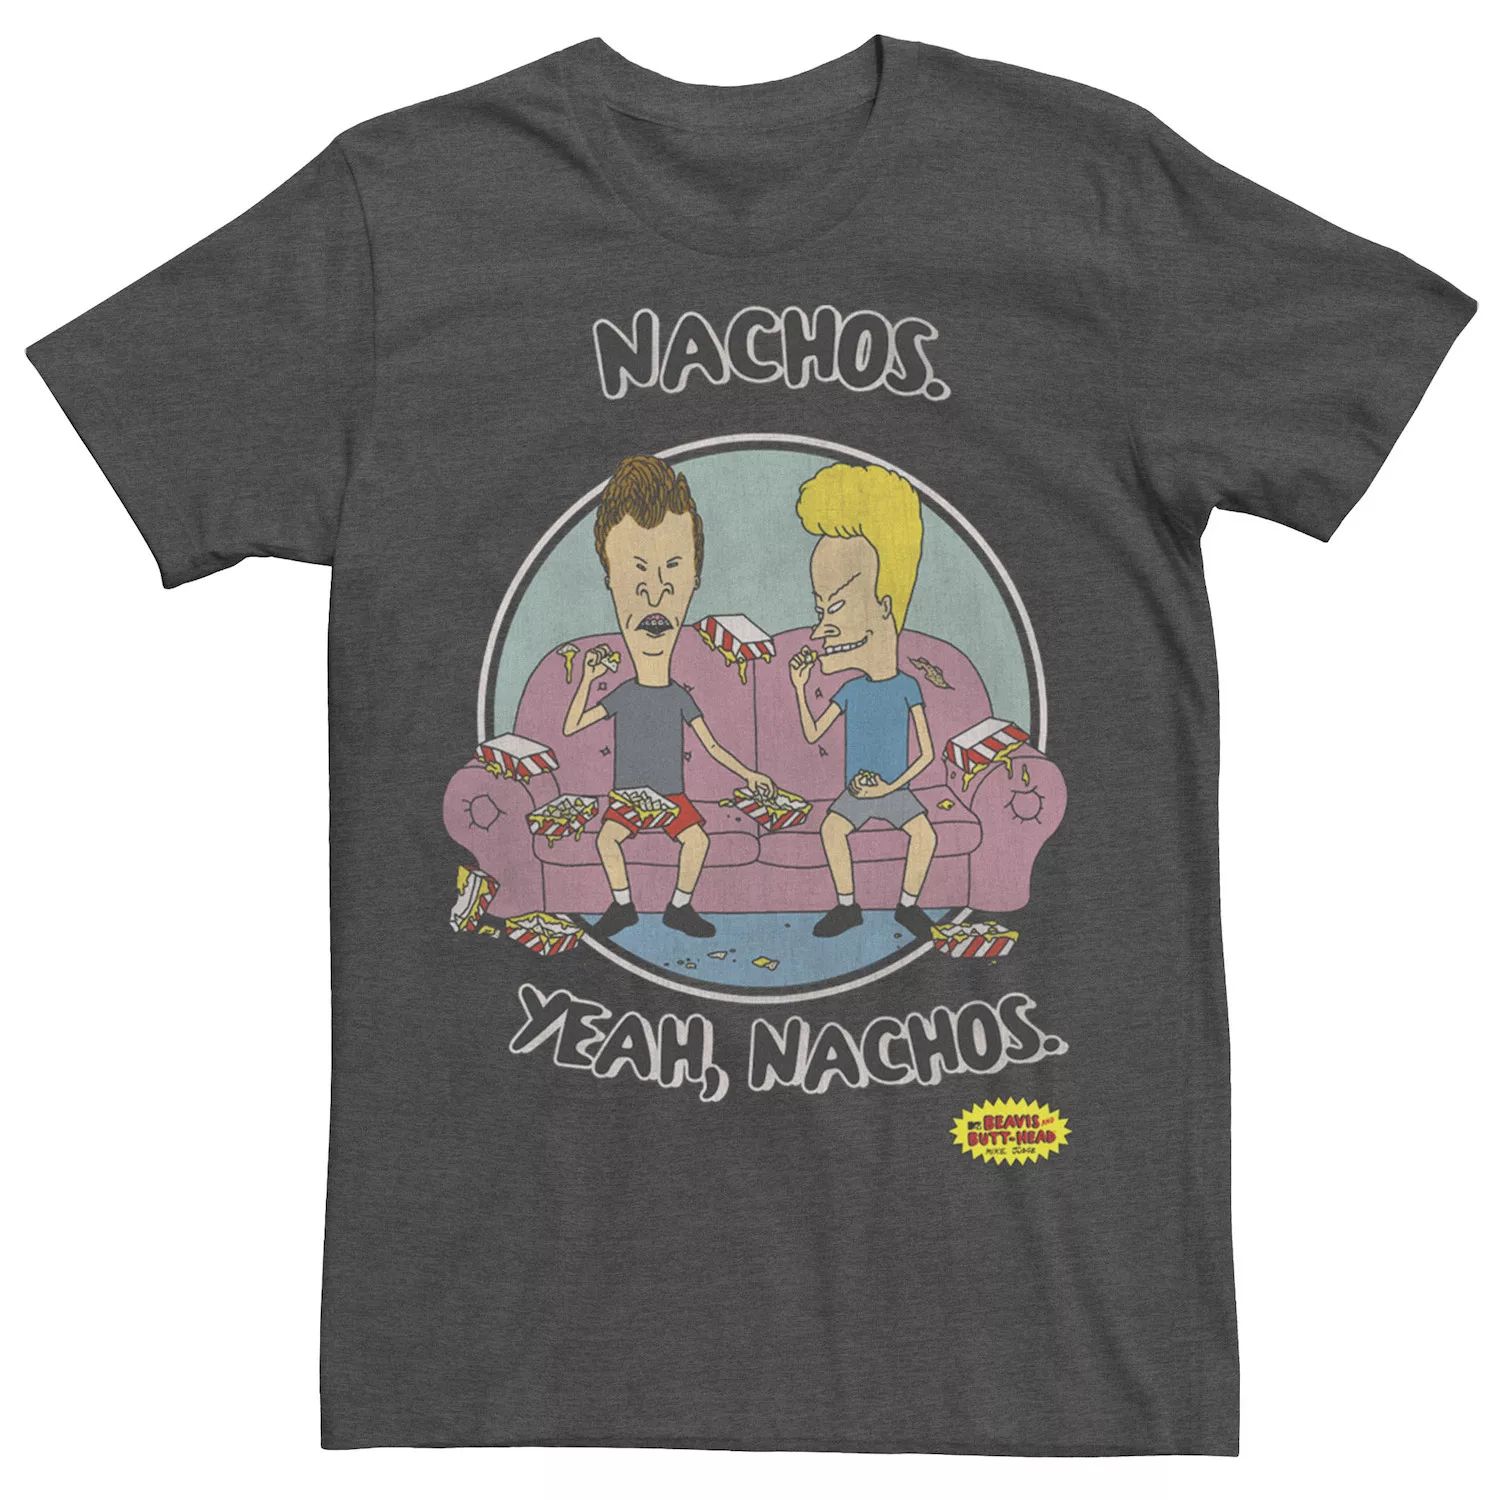 Мужская футболка Beavis And Butt-Head Nachos Yeah Nachos с портретом Licensed Character